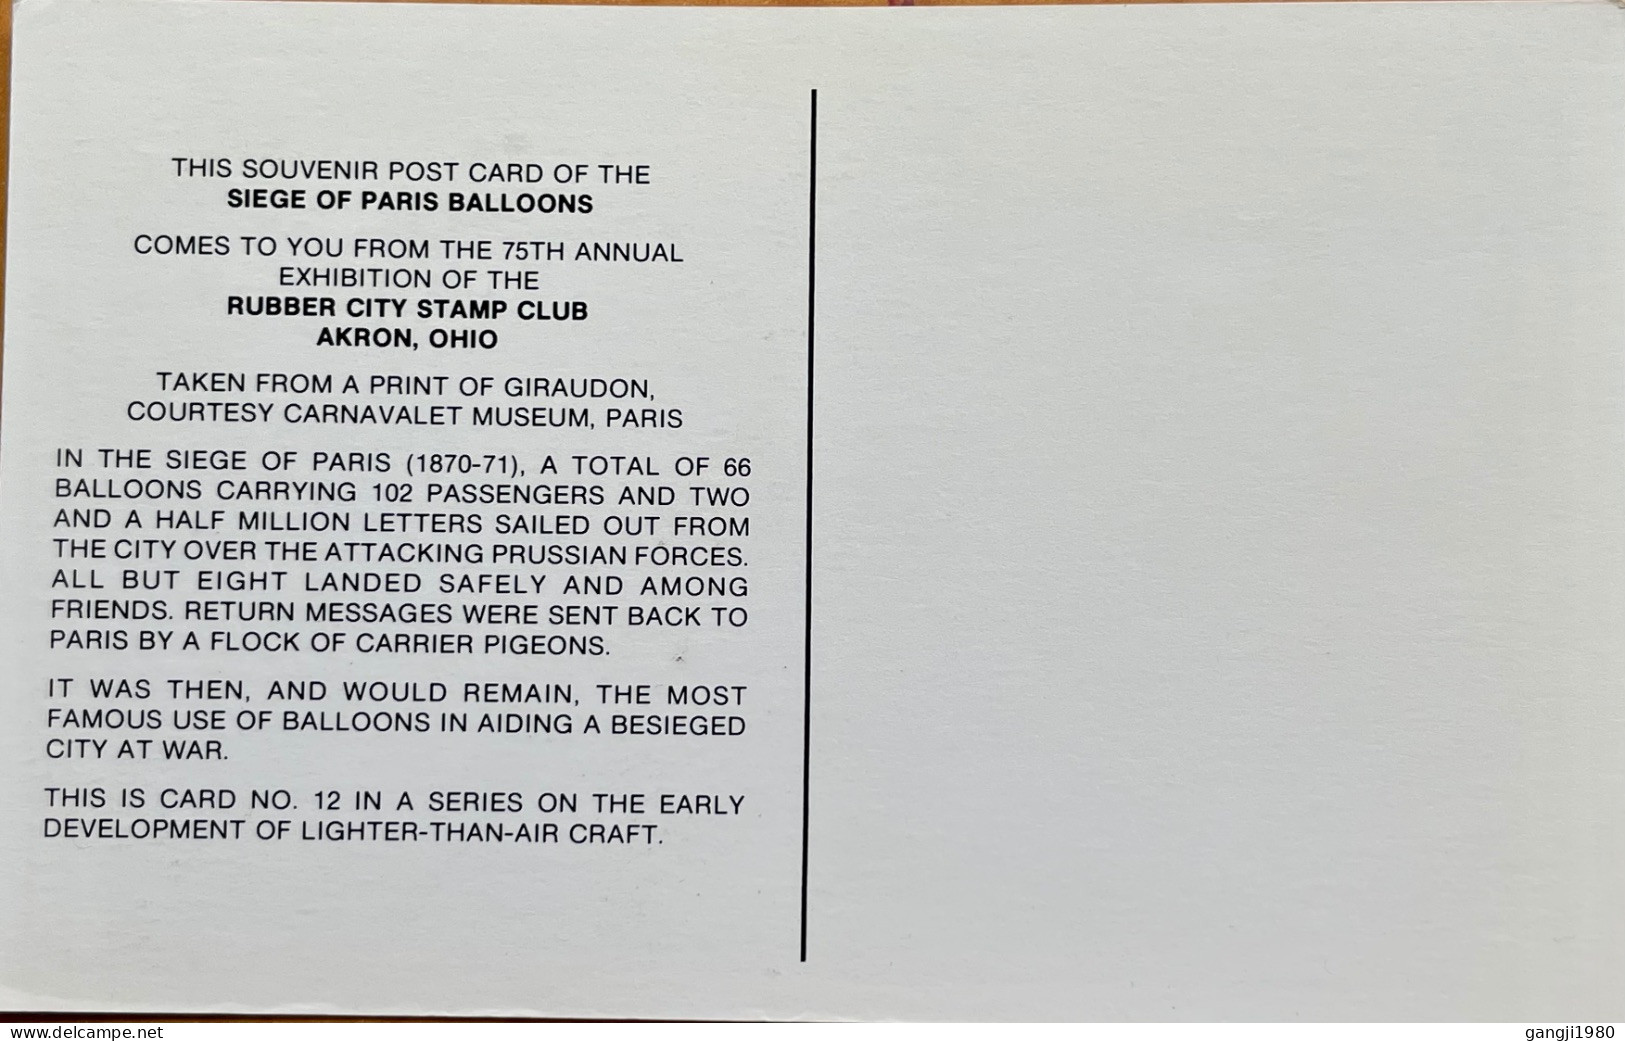 POSTCARD FRANCE STEGE OF PARIS 1870-71 66 BALLOONS CARRY 102 PASSENGER &2½ MILLION LETTERS - Fesselballons